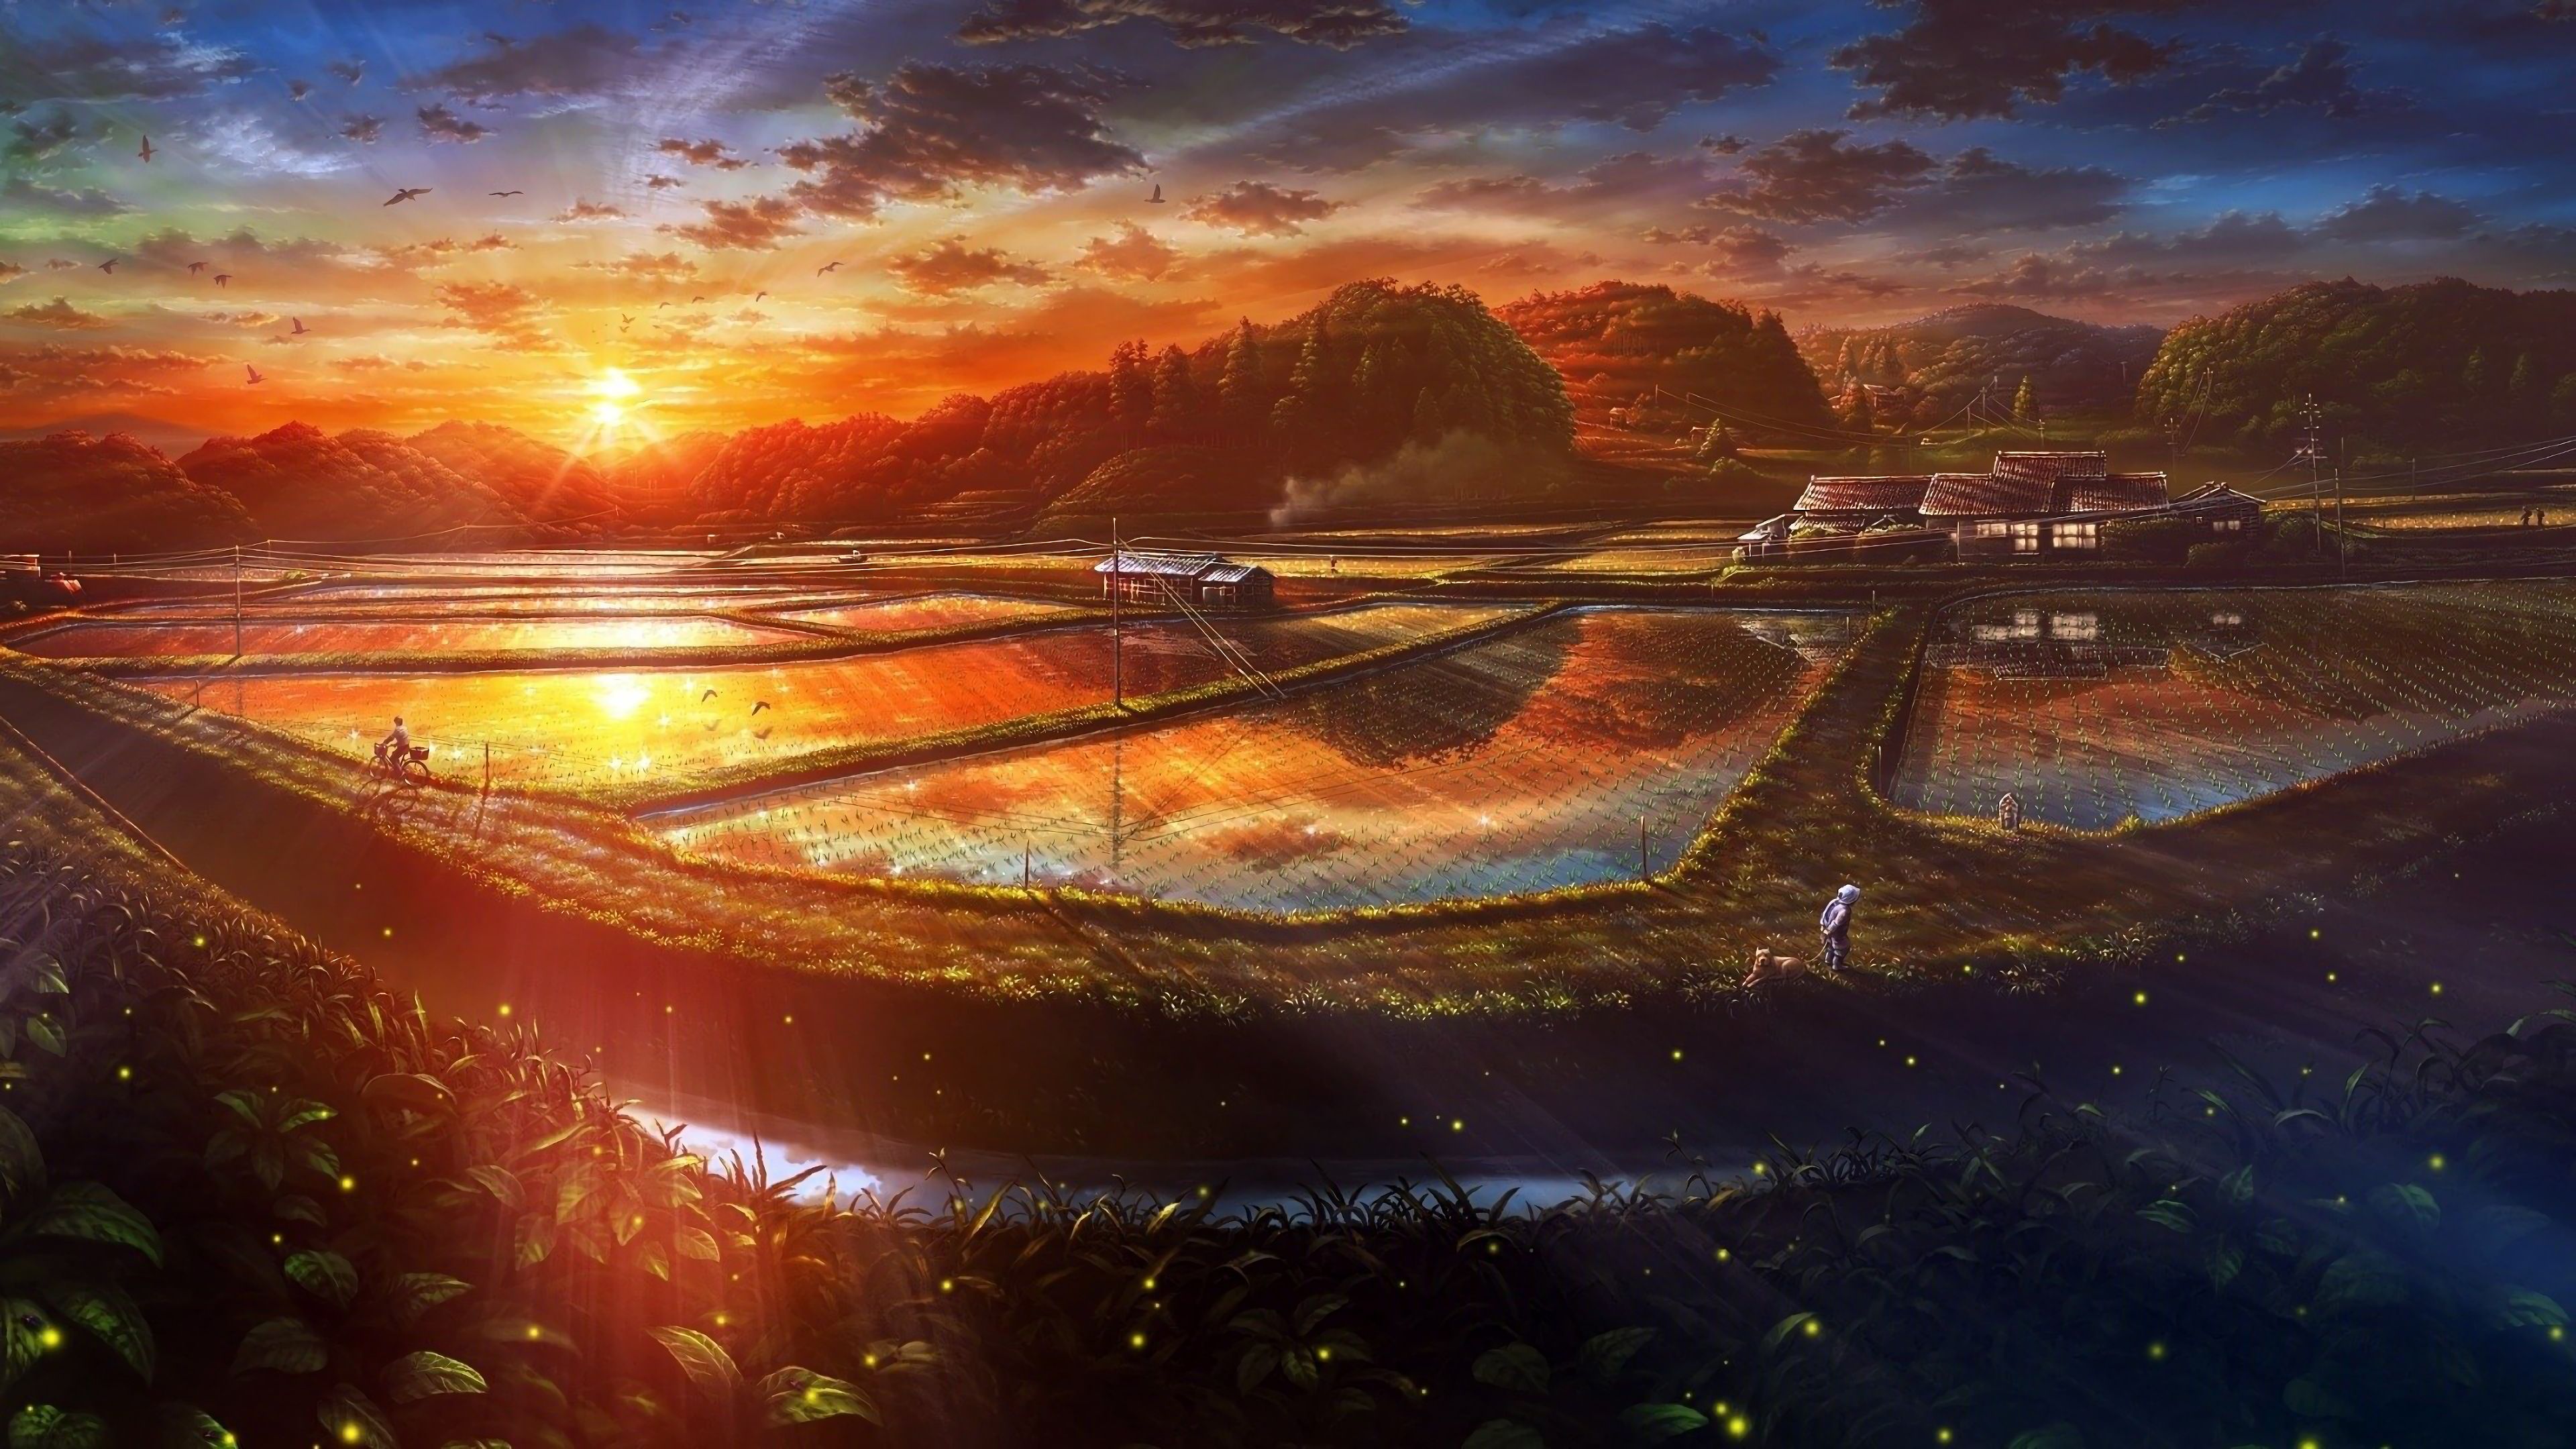 Sunset Paddy Field Nature Scenery Landscape Anime 4K Wallpaper